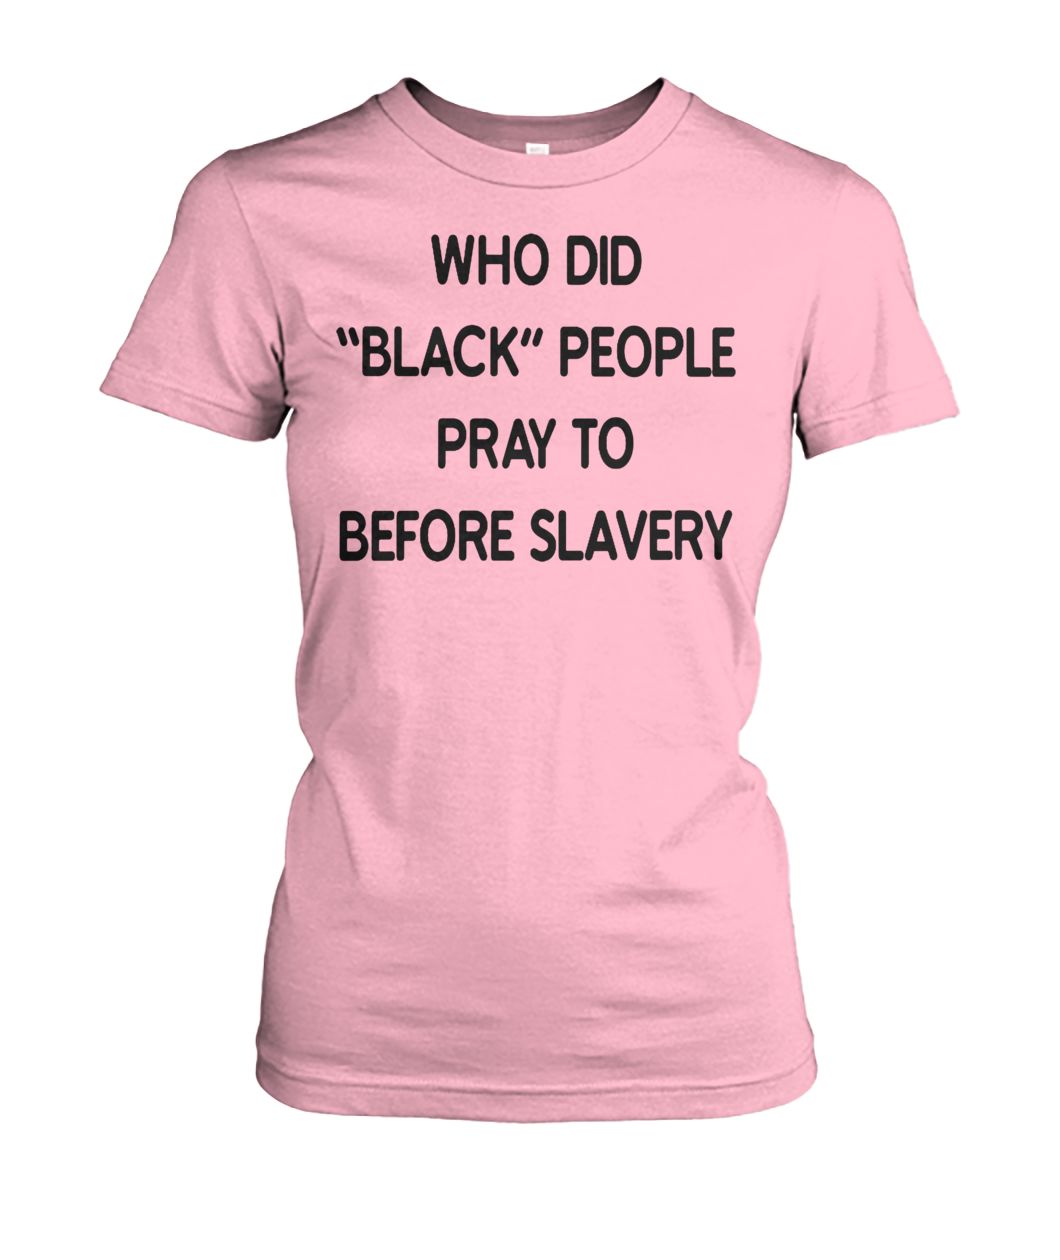 Who did black people pray to before slavery women's crew tee